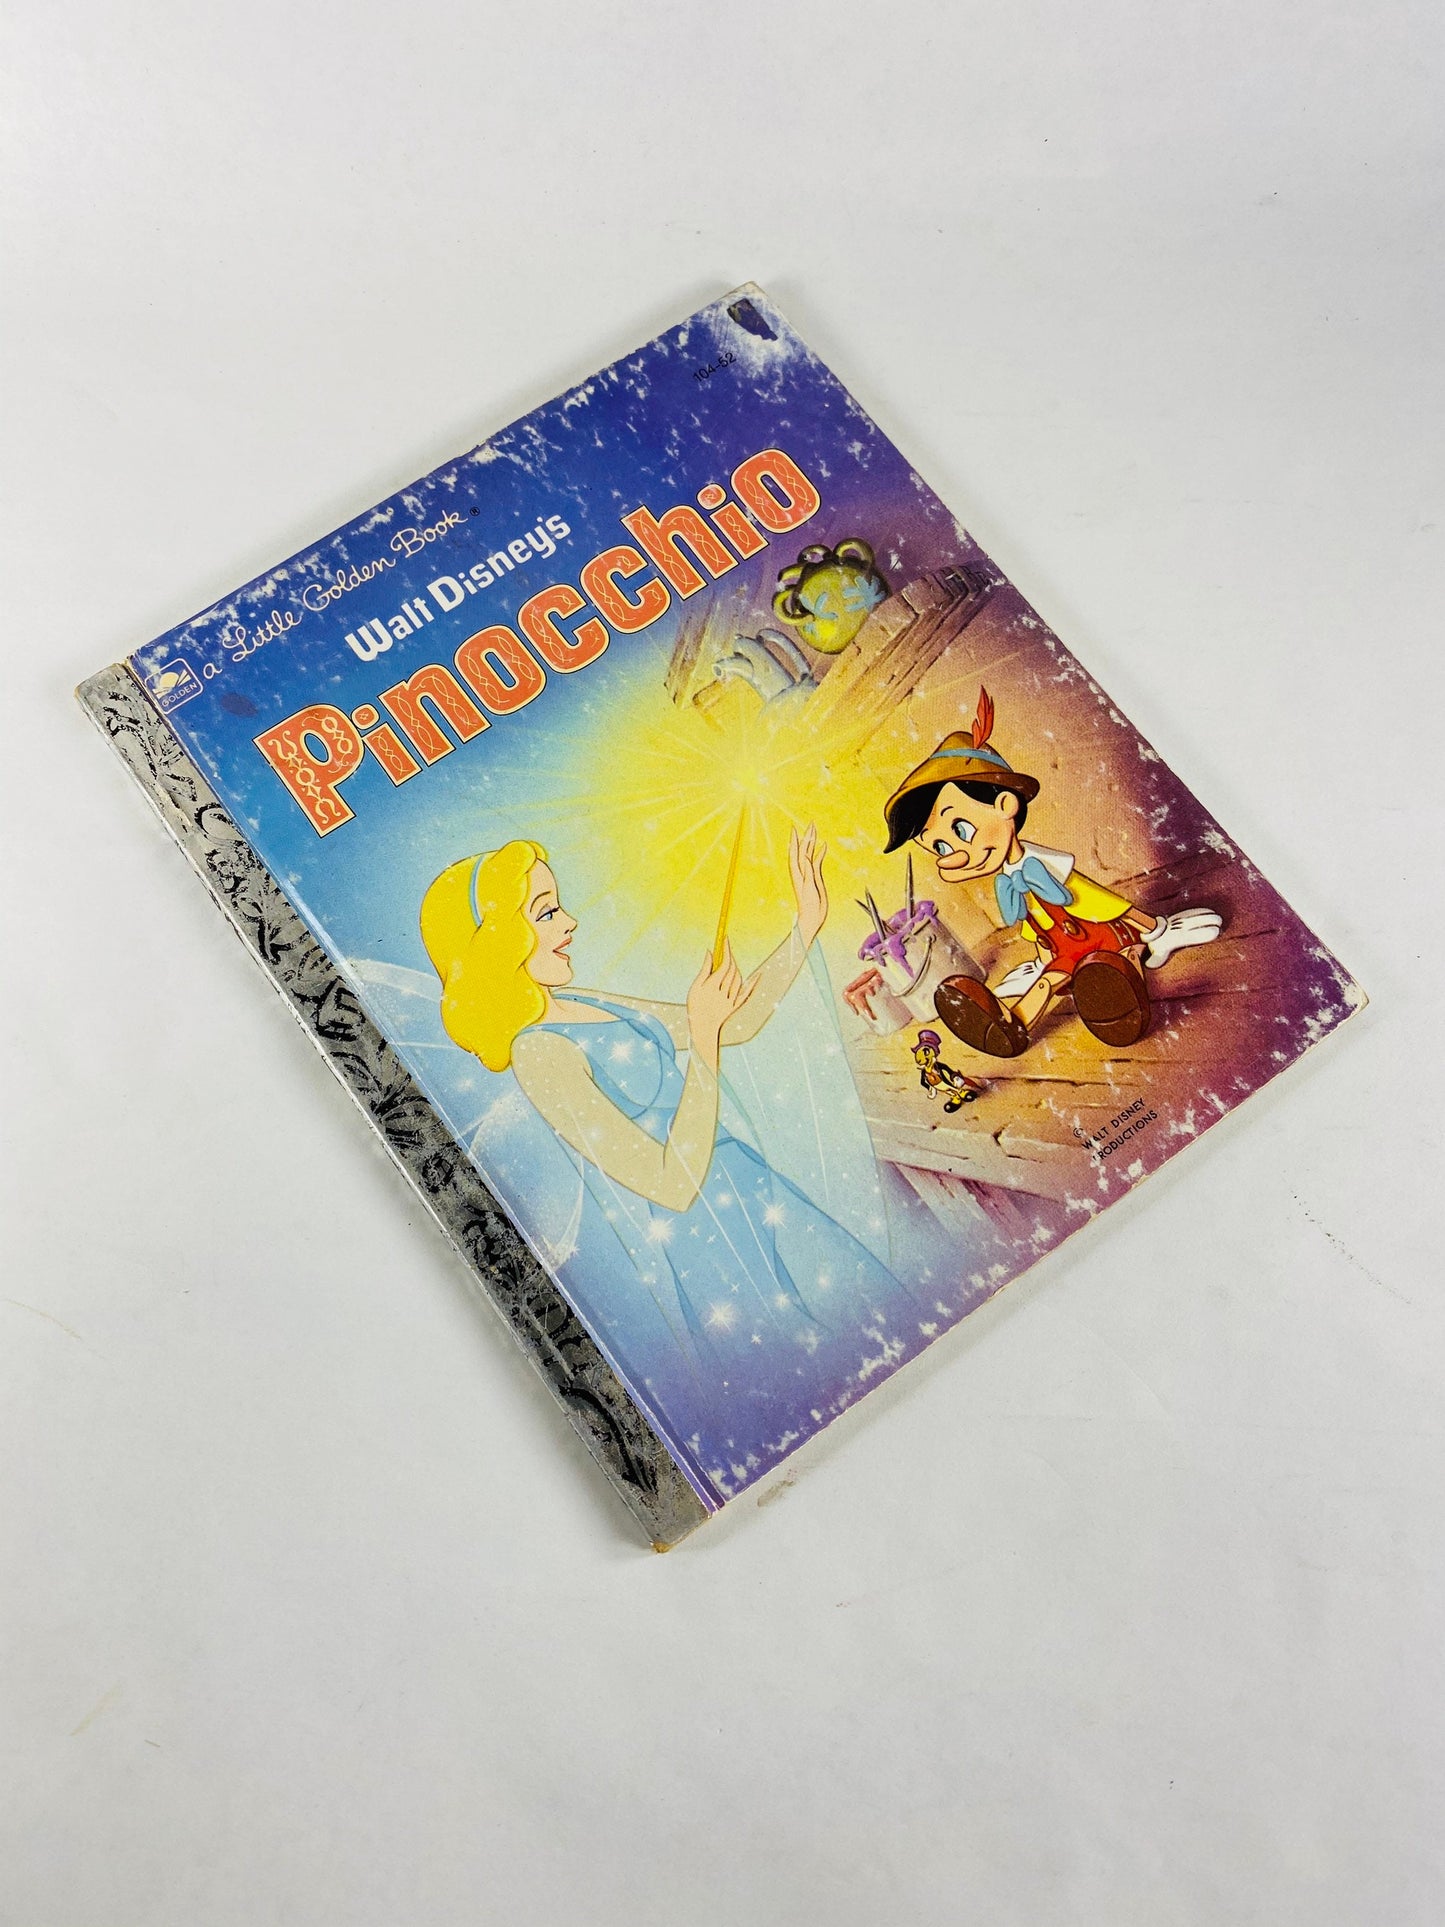 1980 Pinocchio Little Golden Book Walt Disney illustrations children’s stocking stuffer at home reading. Bedtime stories